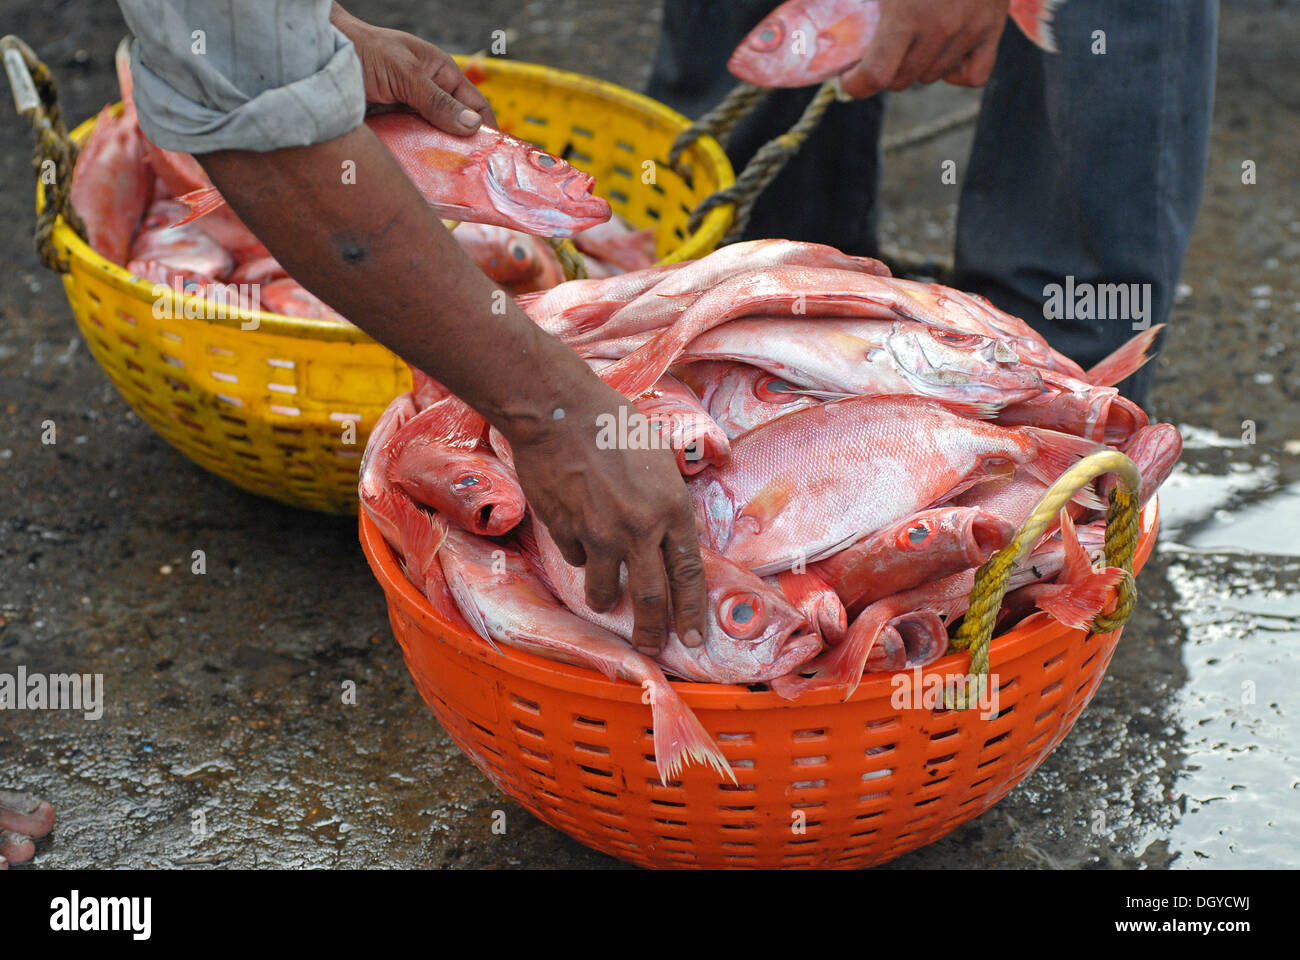 Freshly caught fish in a plastic basket, Beypore, Kerala, Malabar Coast, southern India, Asia Stock Photo